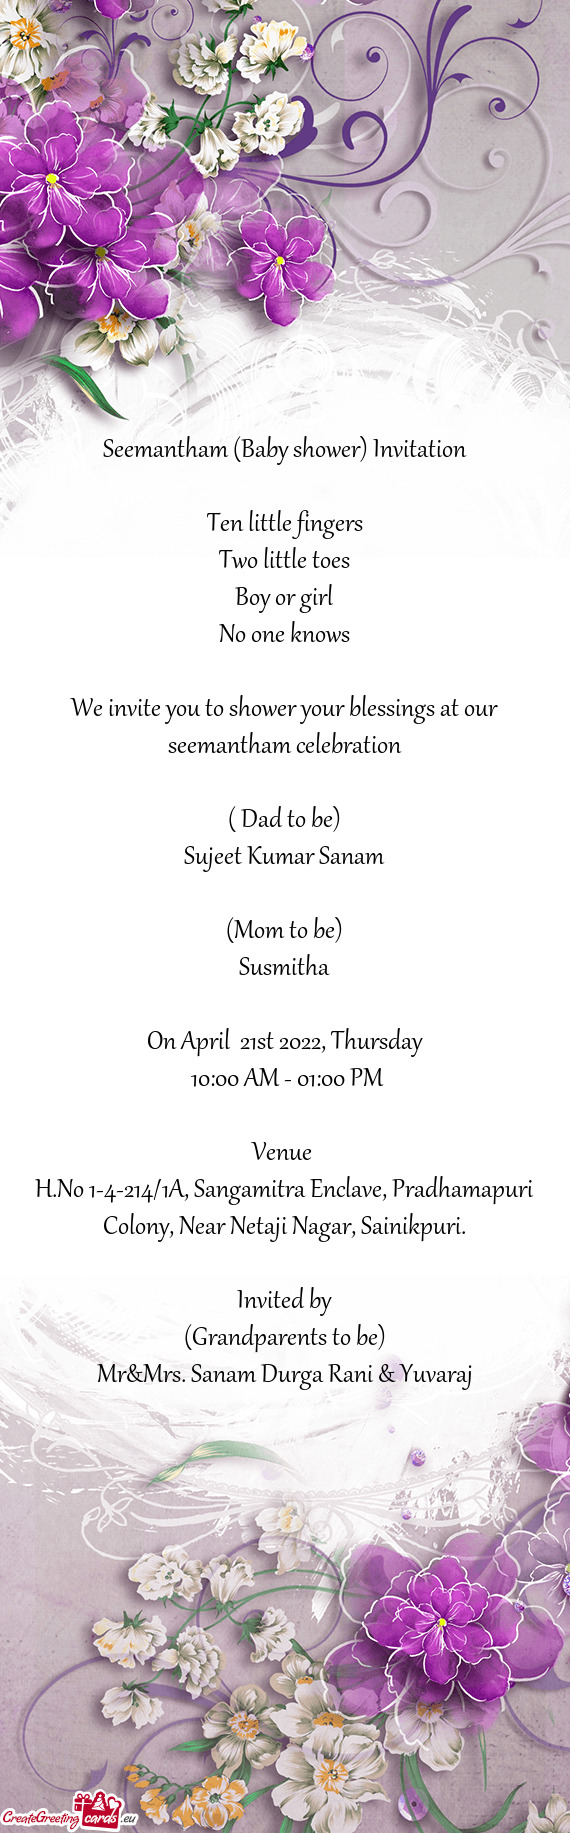 Seemantham (Baby shower) Invitation